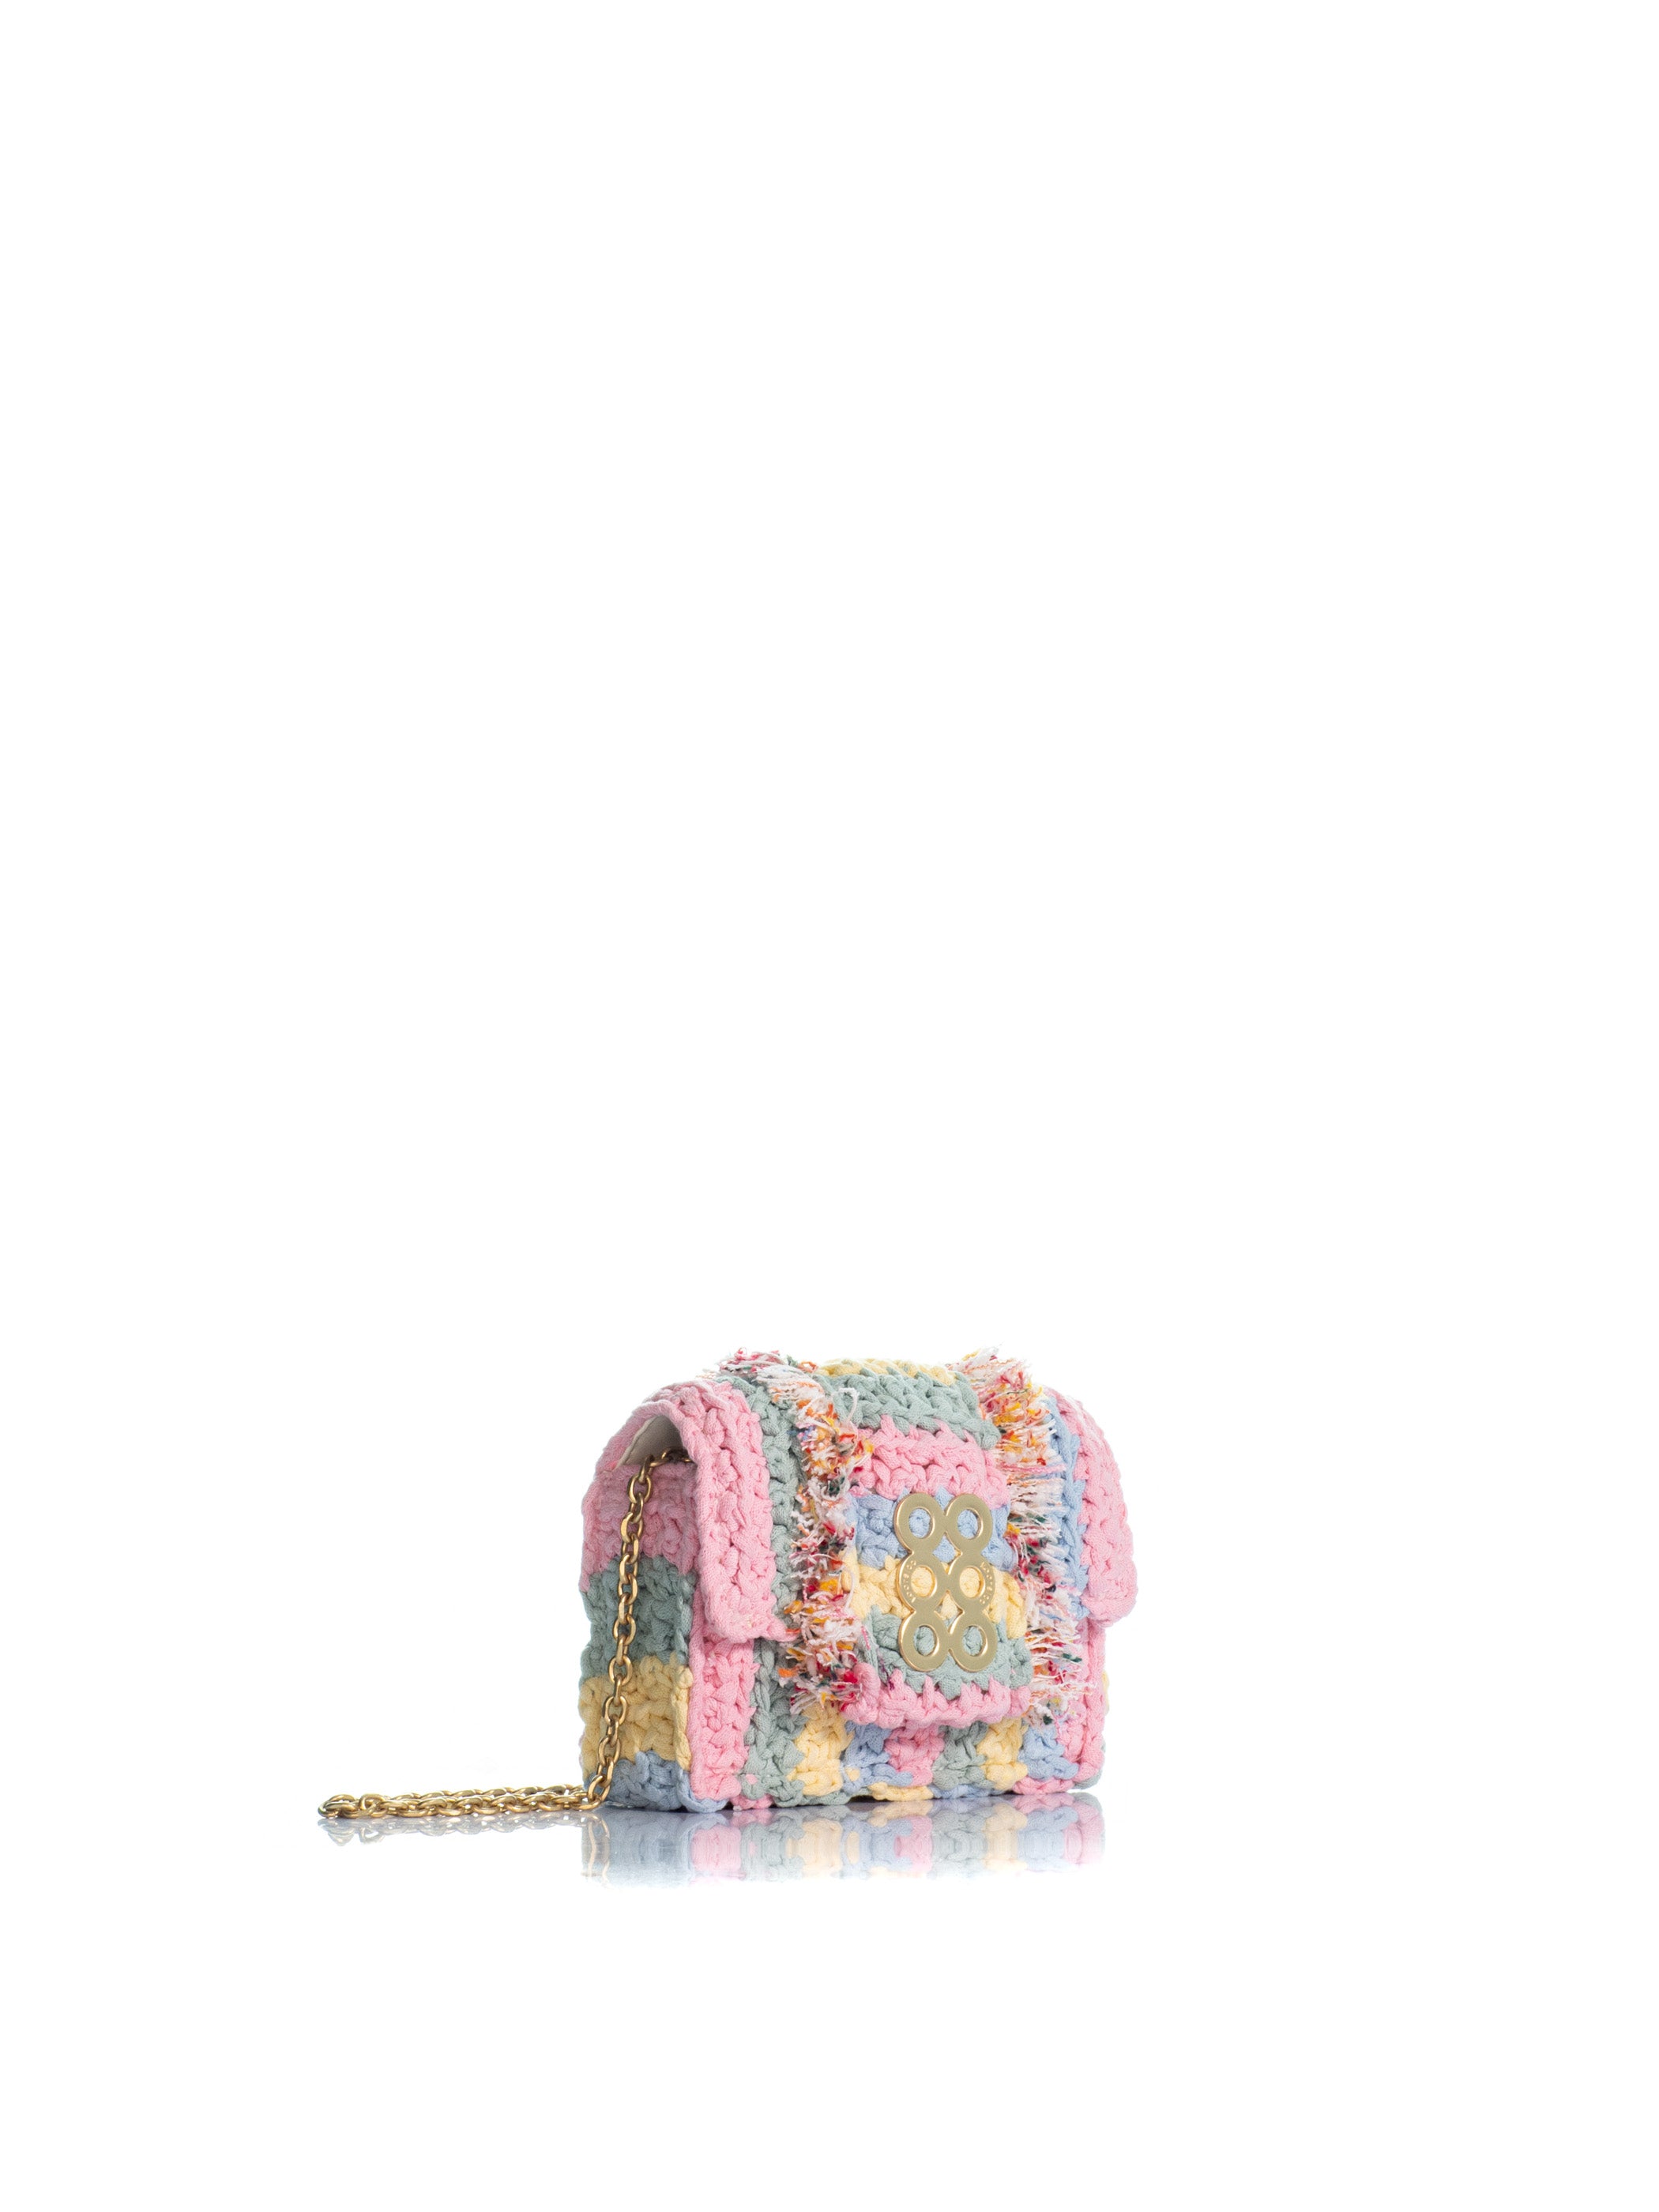 The Ibiza Mini Crochet